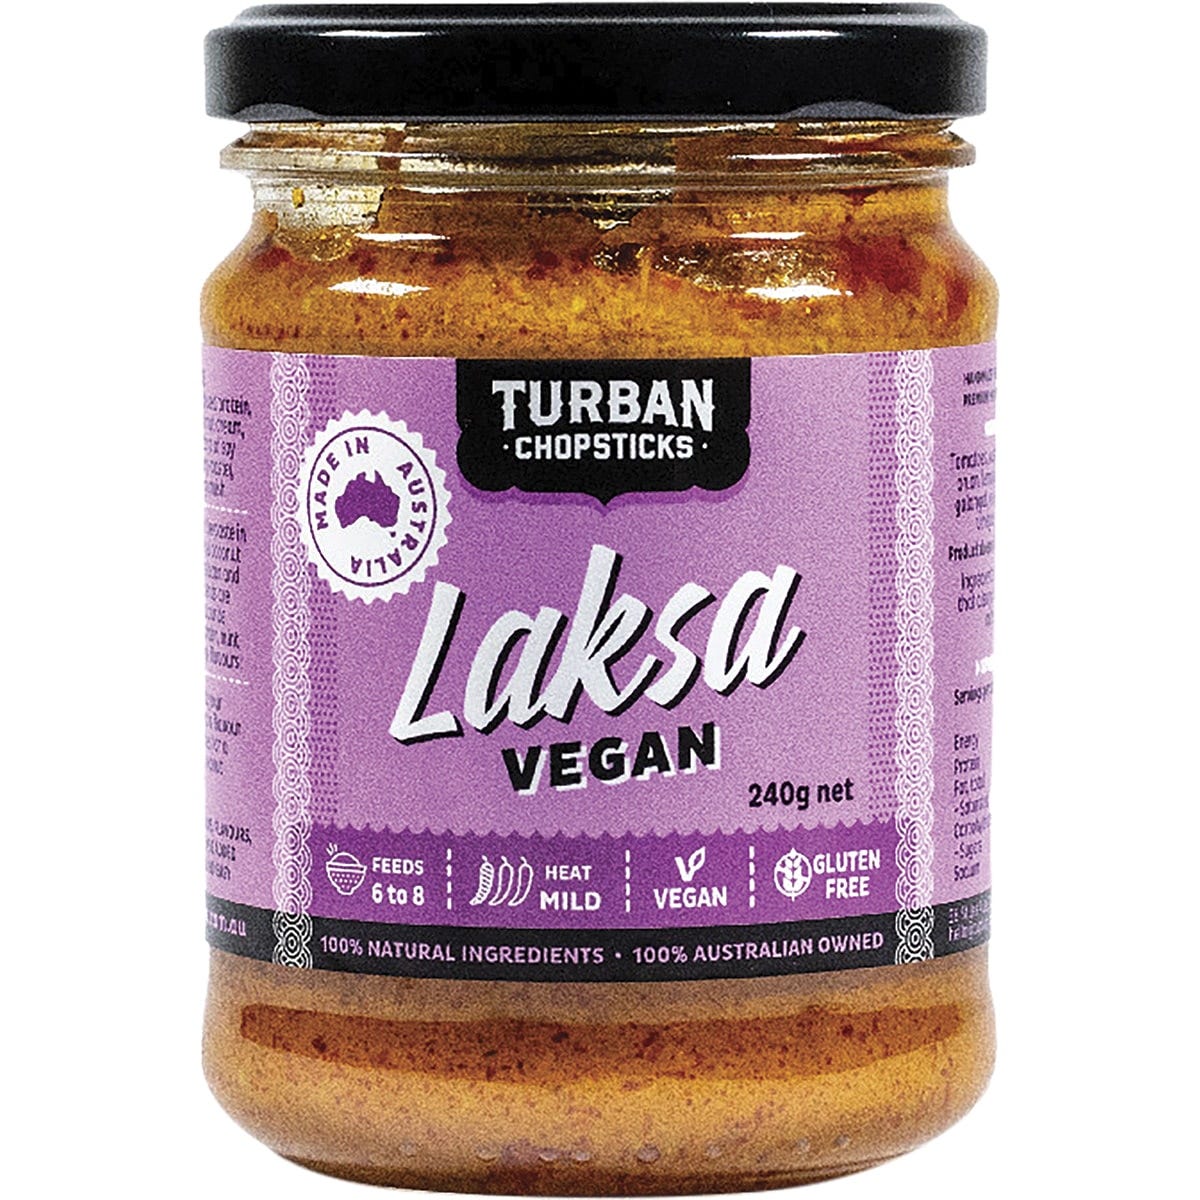 Turban Chopsticks Curry Paste Laksa Vegan 240g - Dr Earth - Herbs Spices & Seasonings